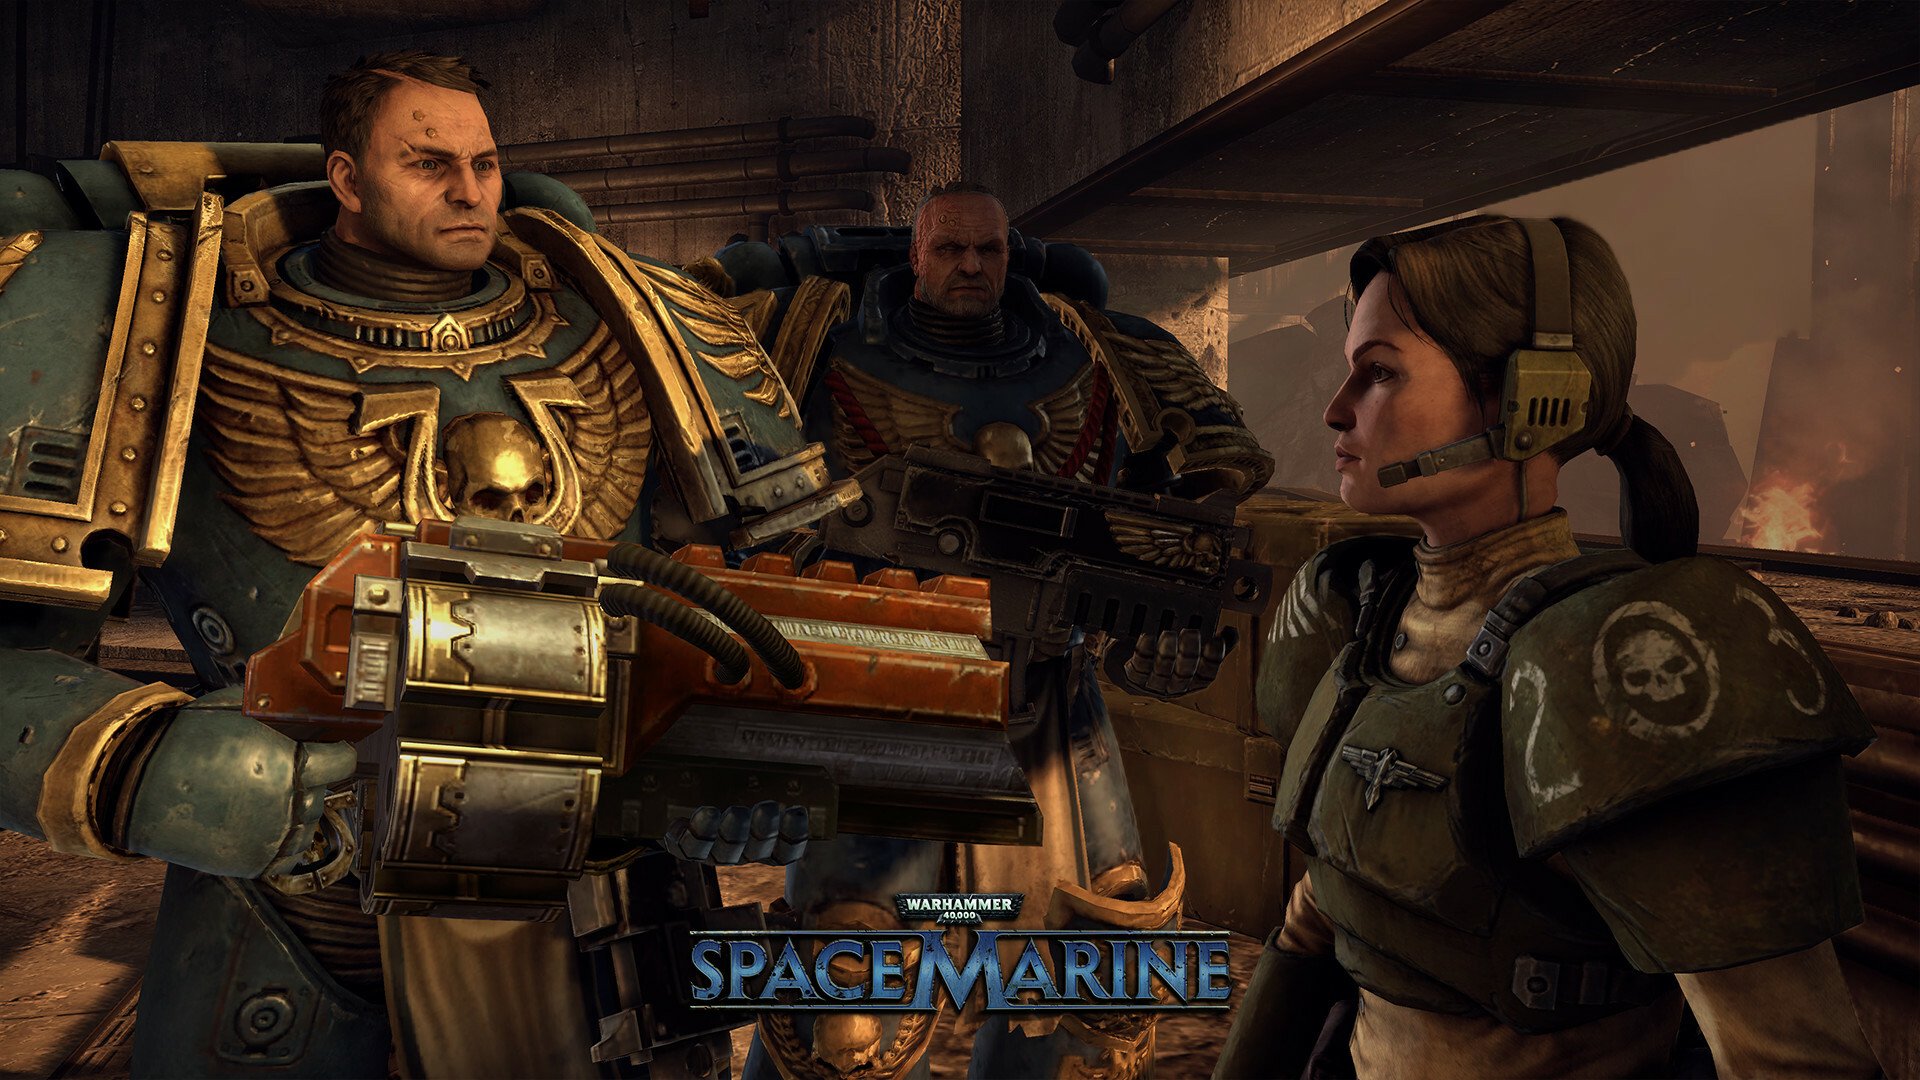 Скриншот 1 к игре Warhammer 40000: Space Marine v1.0.1 [GOG] (2011)